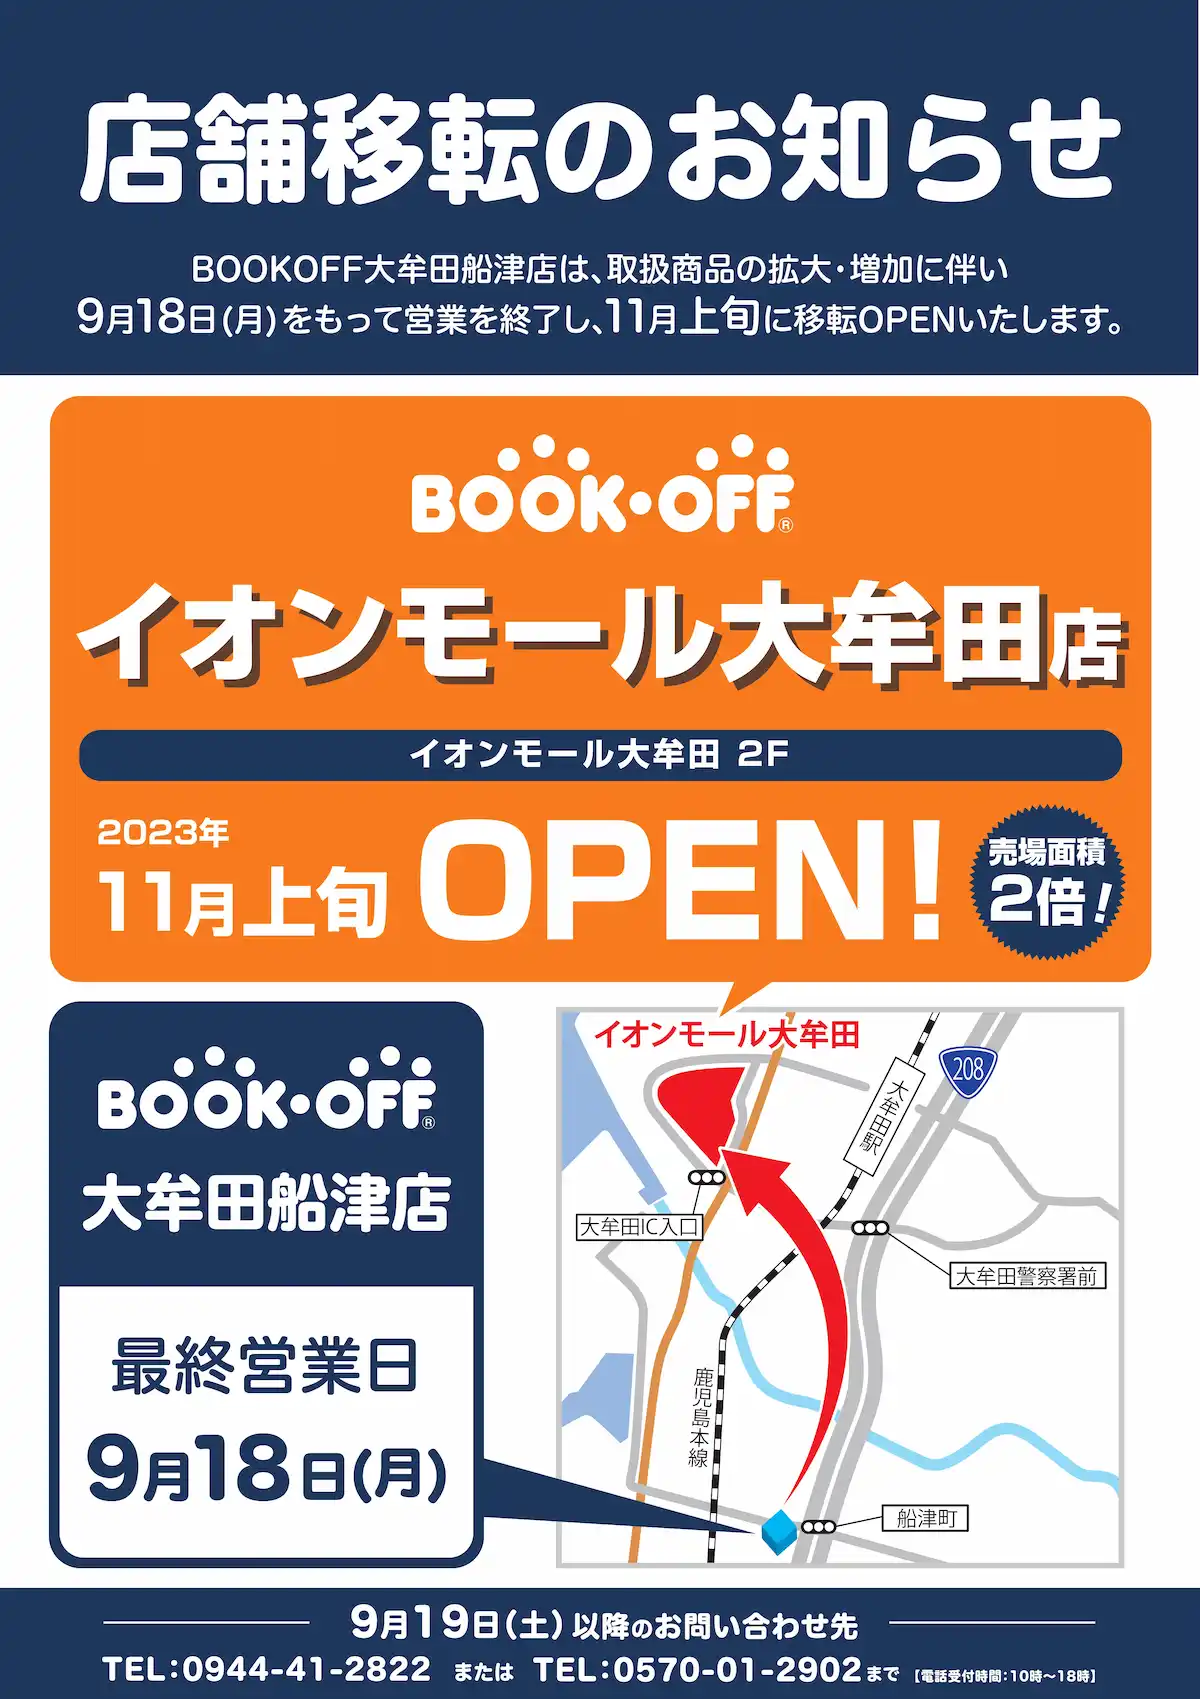 BOOKOFF大牟田船津店が9月18日をもって閉店するみたい。11月上旬にイオンモール大牟田へ移転予定